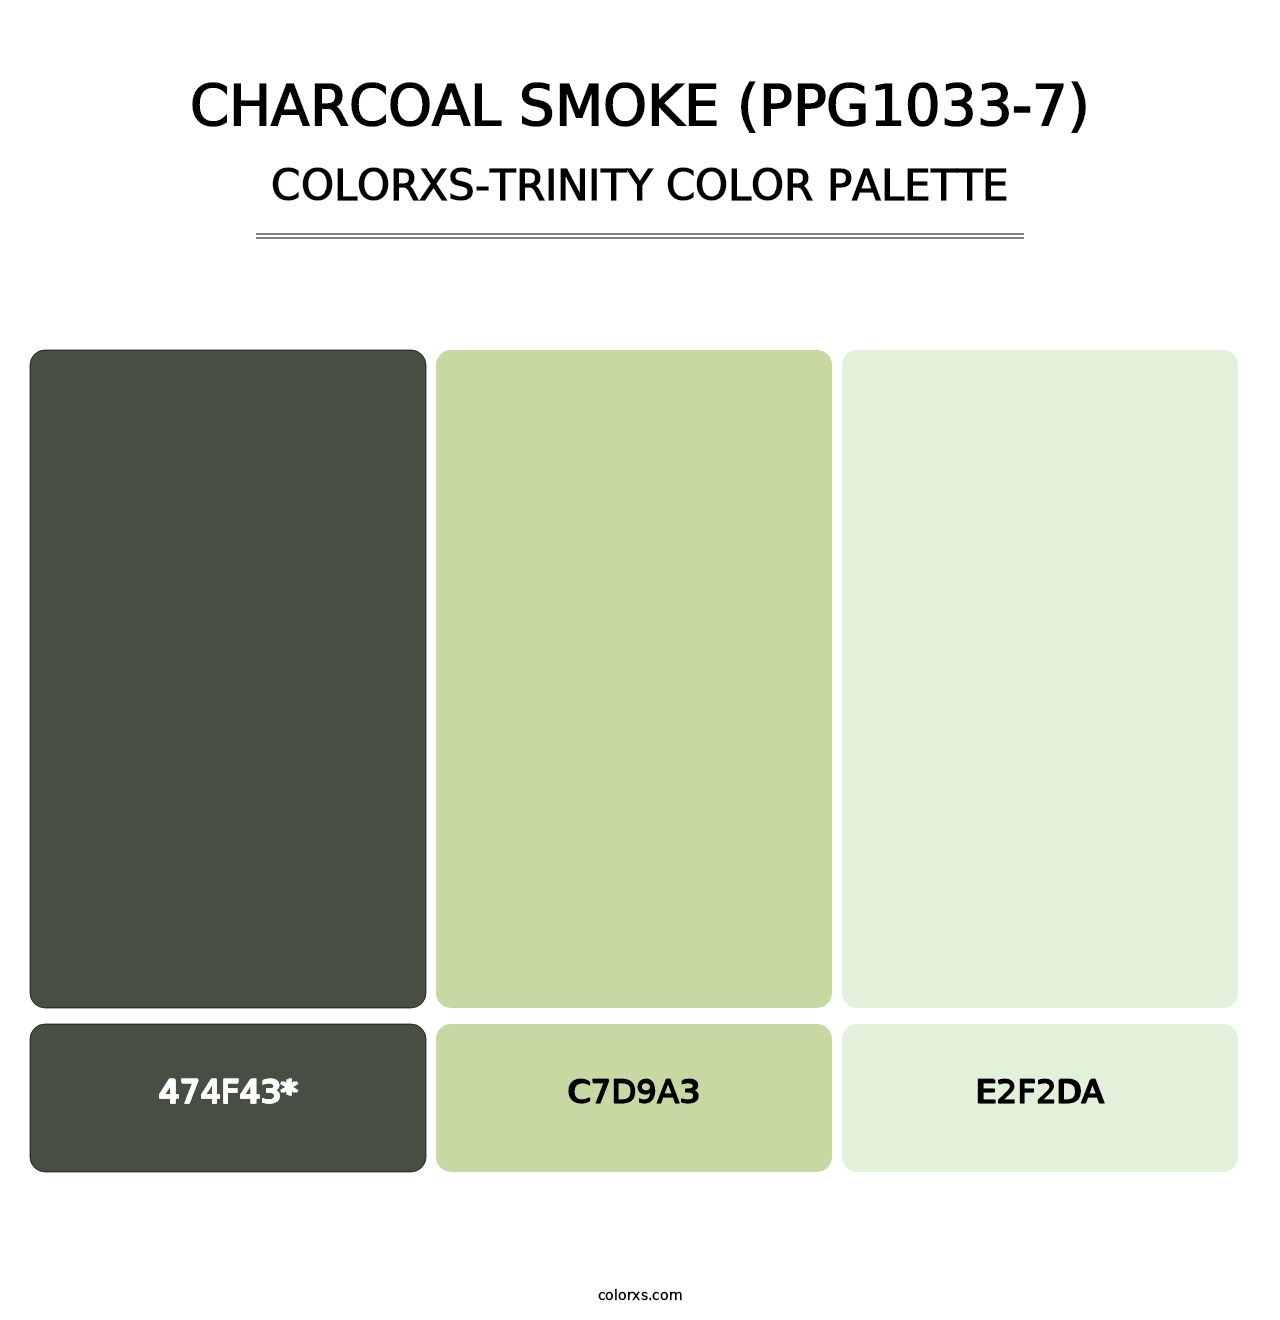 Charcoal Smoke (PPG1033-7) - Colorxs Trinity Palette